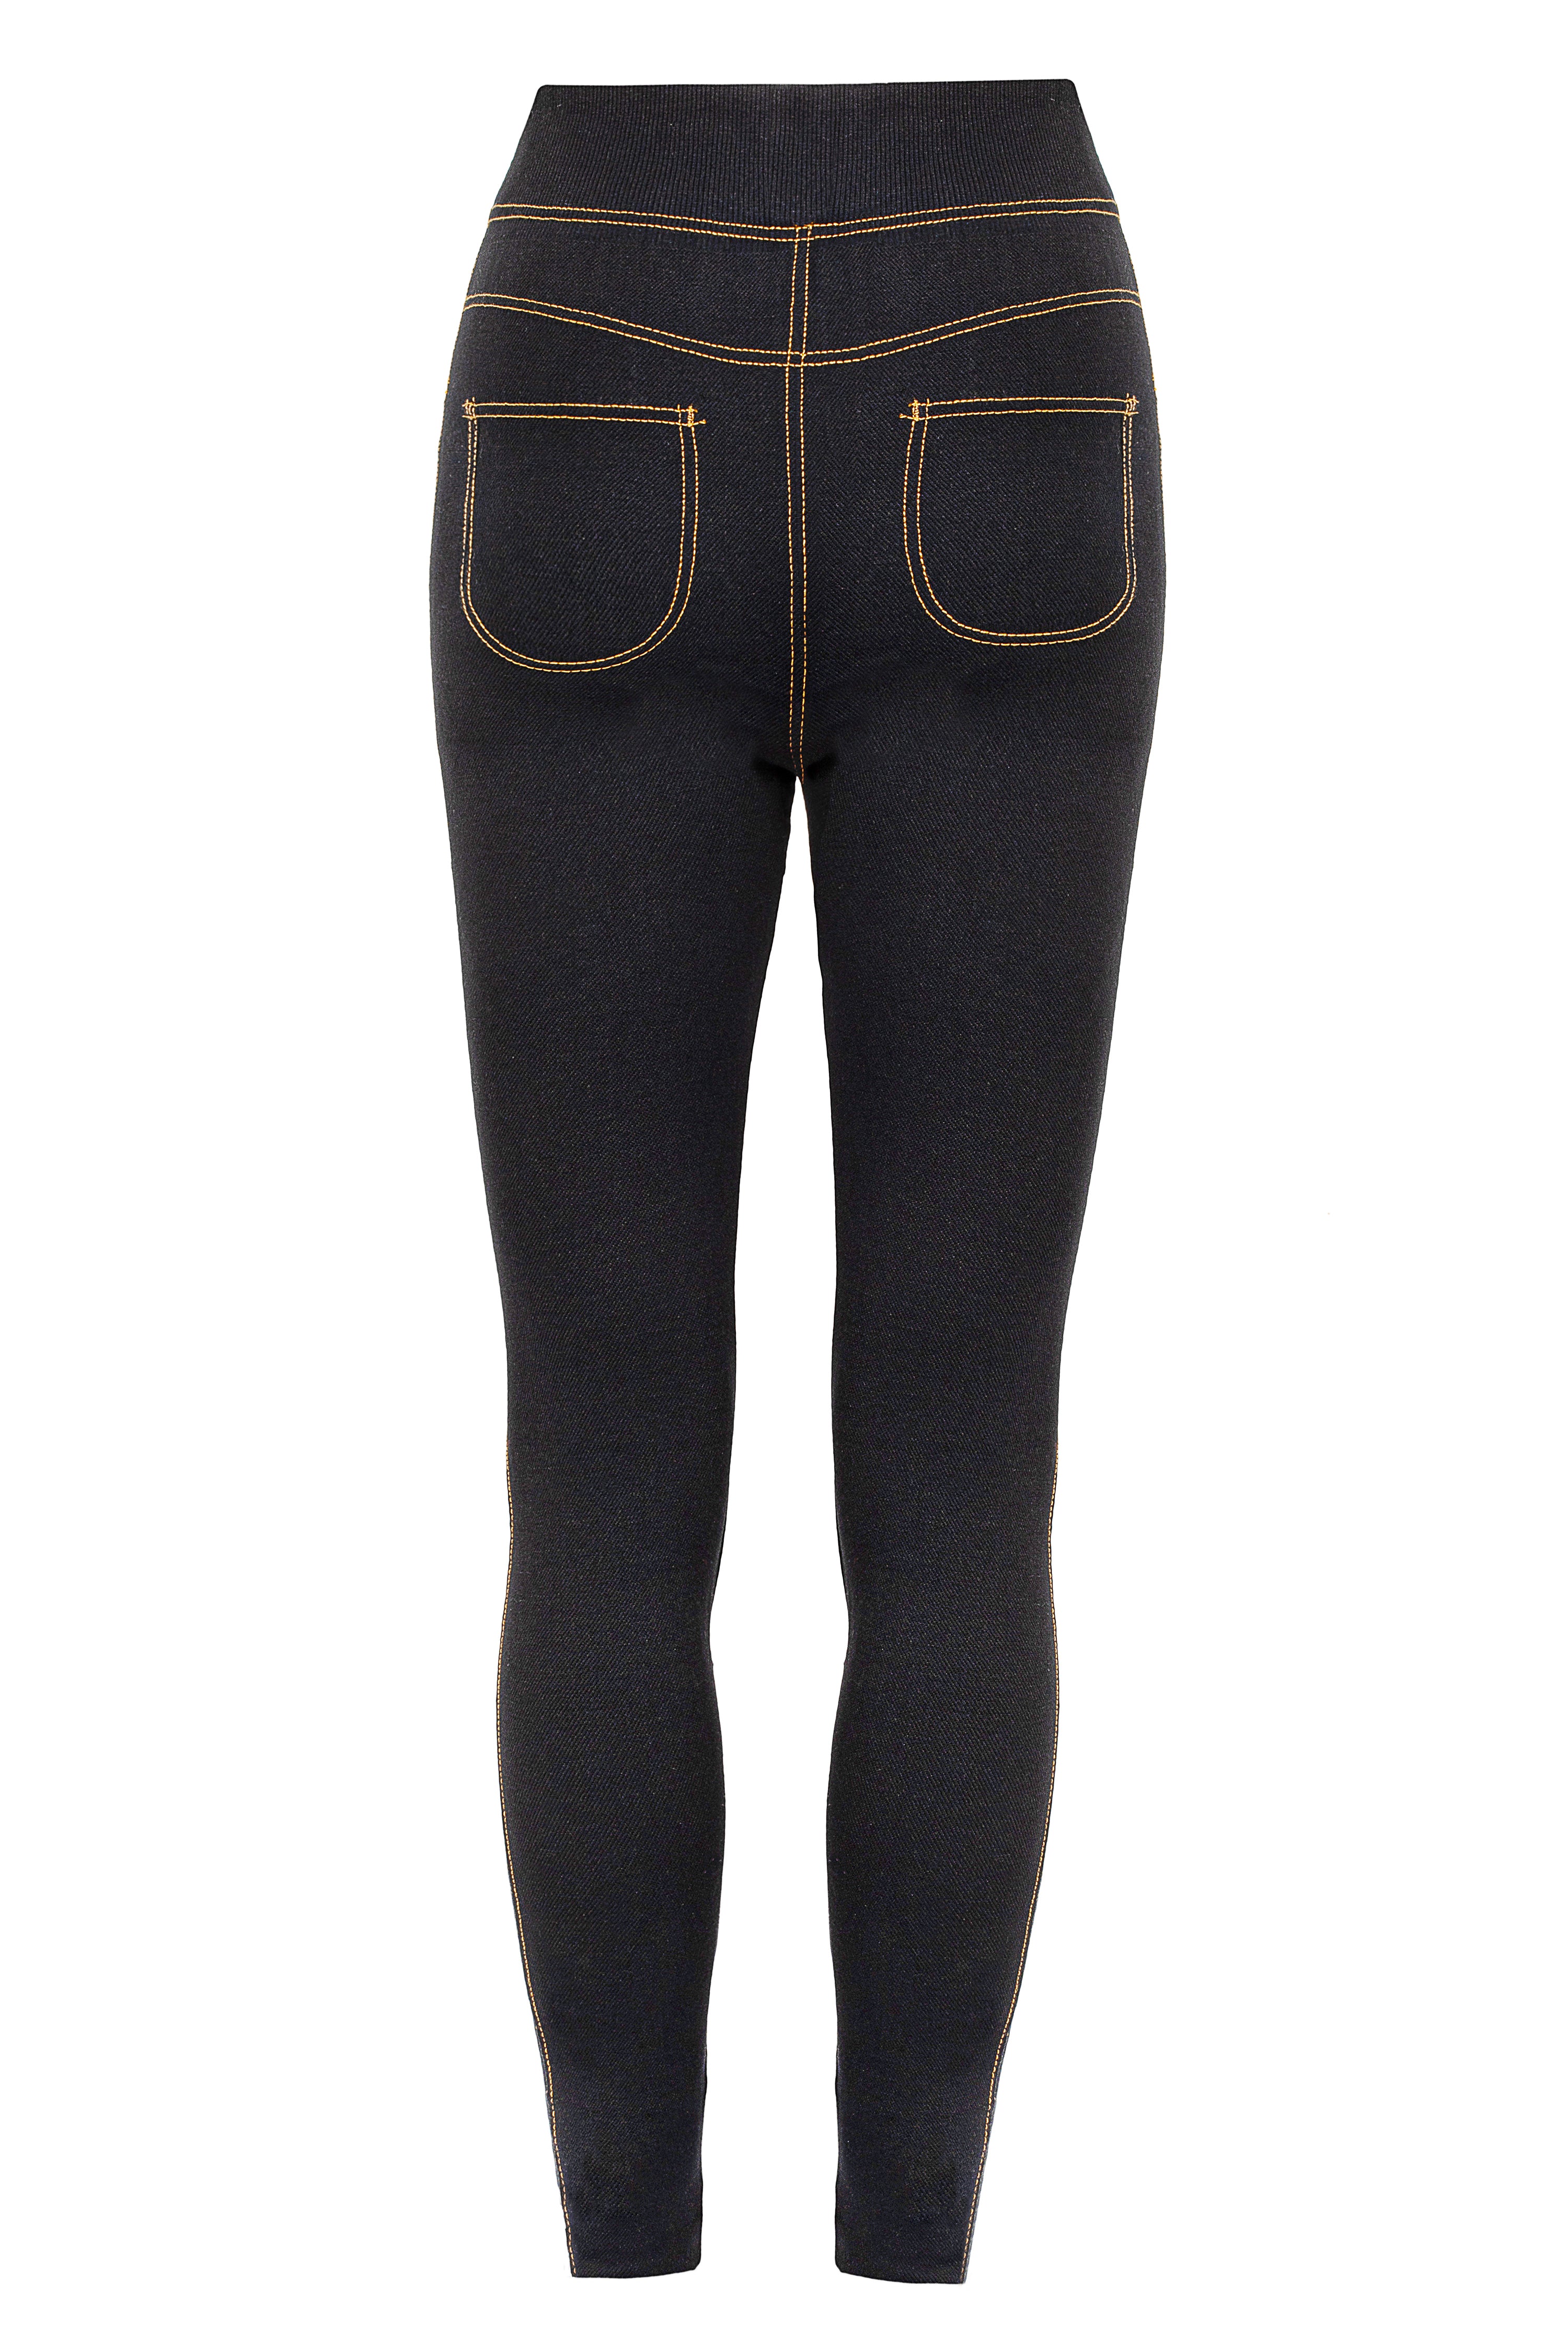 Buy online Black Fleece Jeggings from Jeans & jeggings for Women